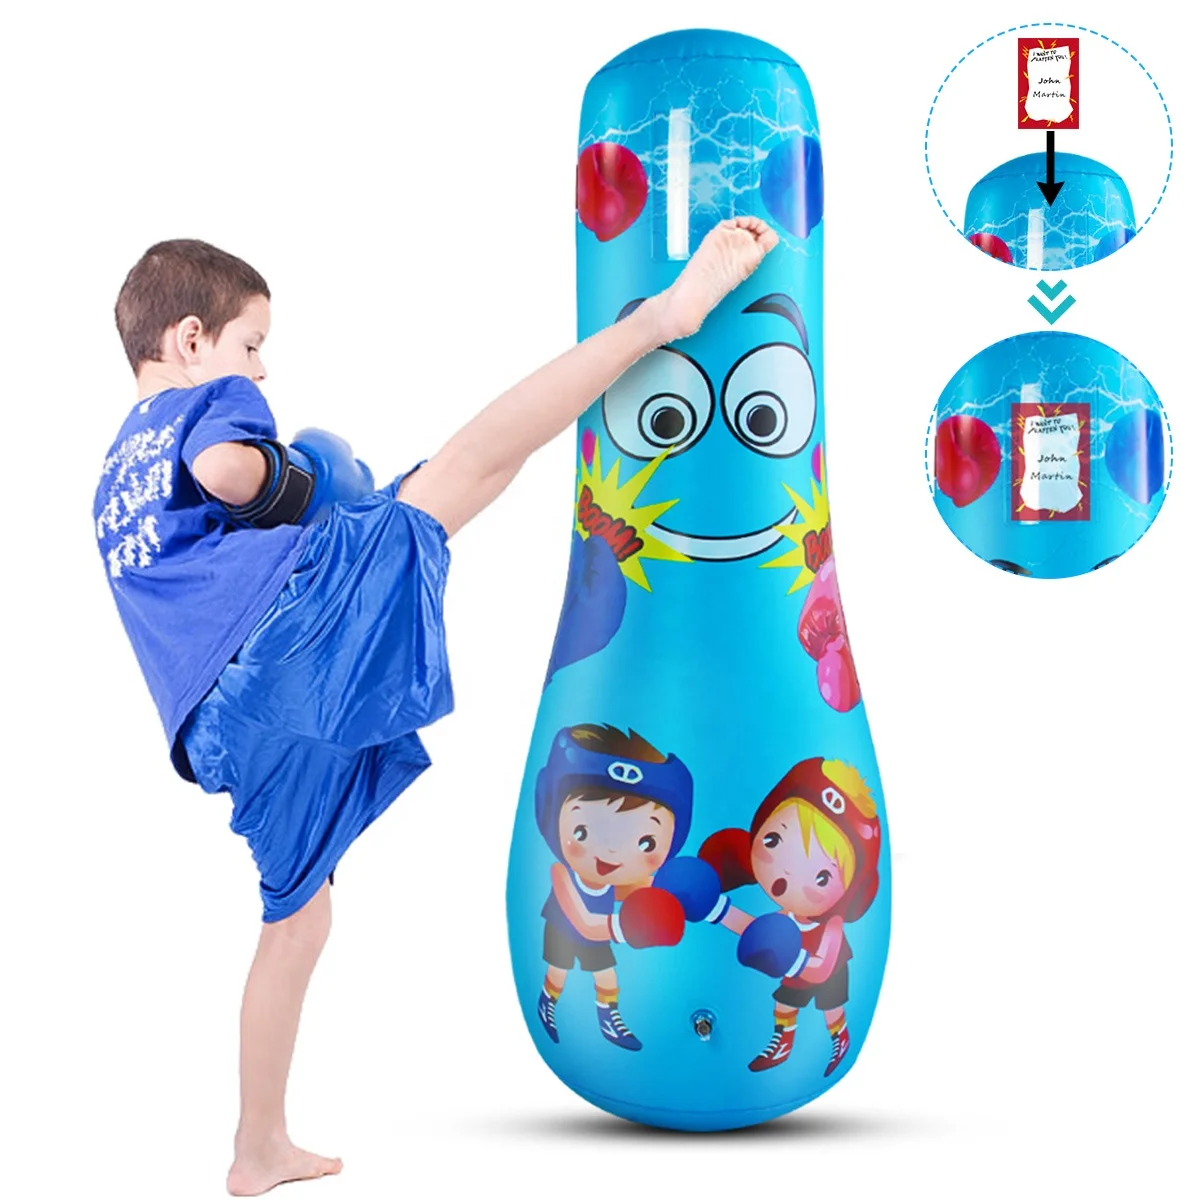 

YDM Kids Inflatable Free Standing Boxing Punching Bag Children Inflatable Boxing Sandbag, Blue